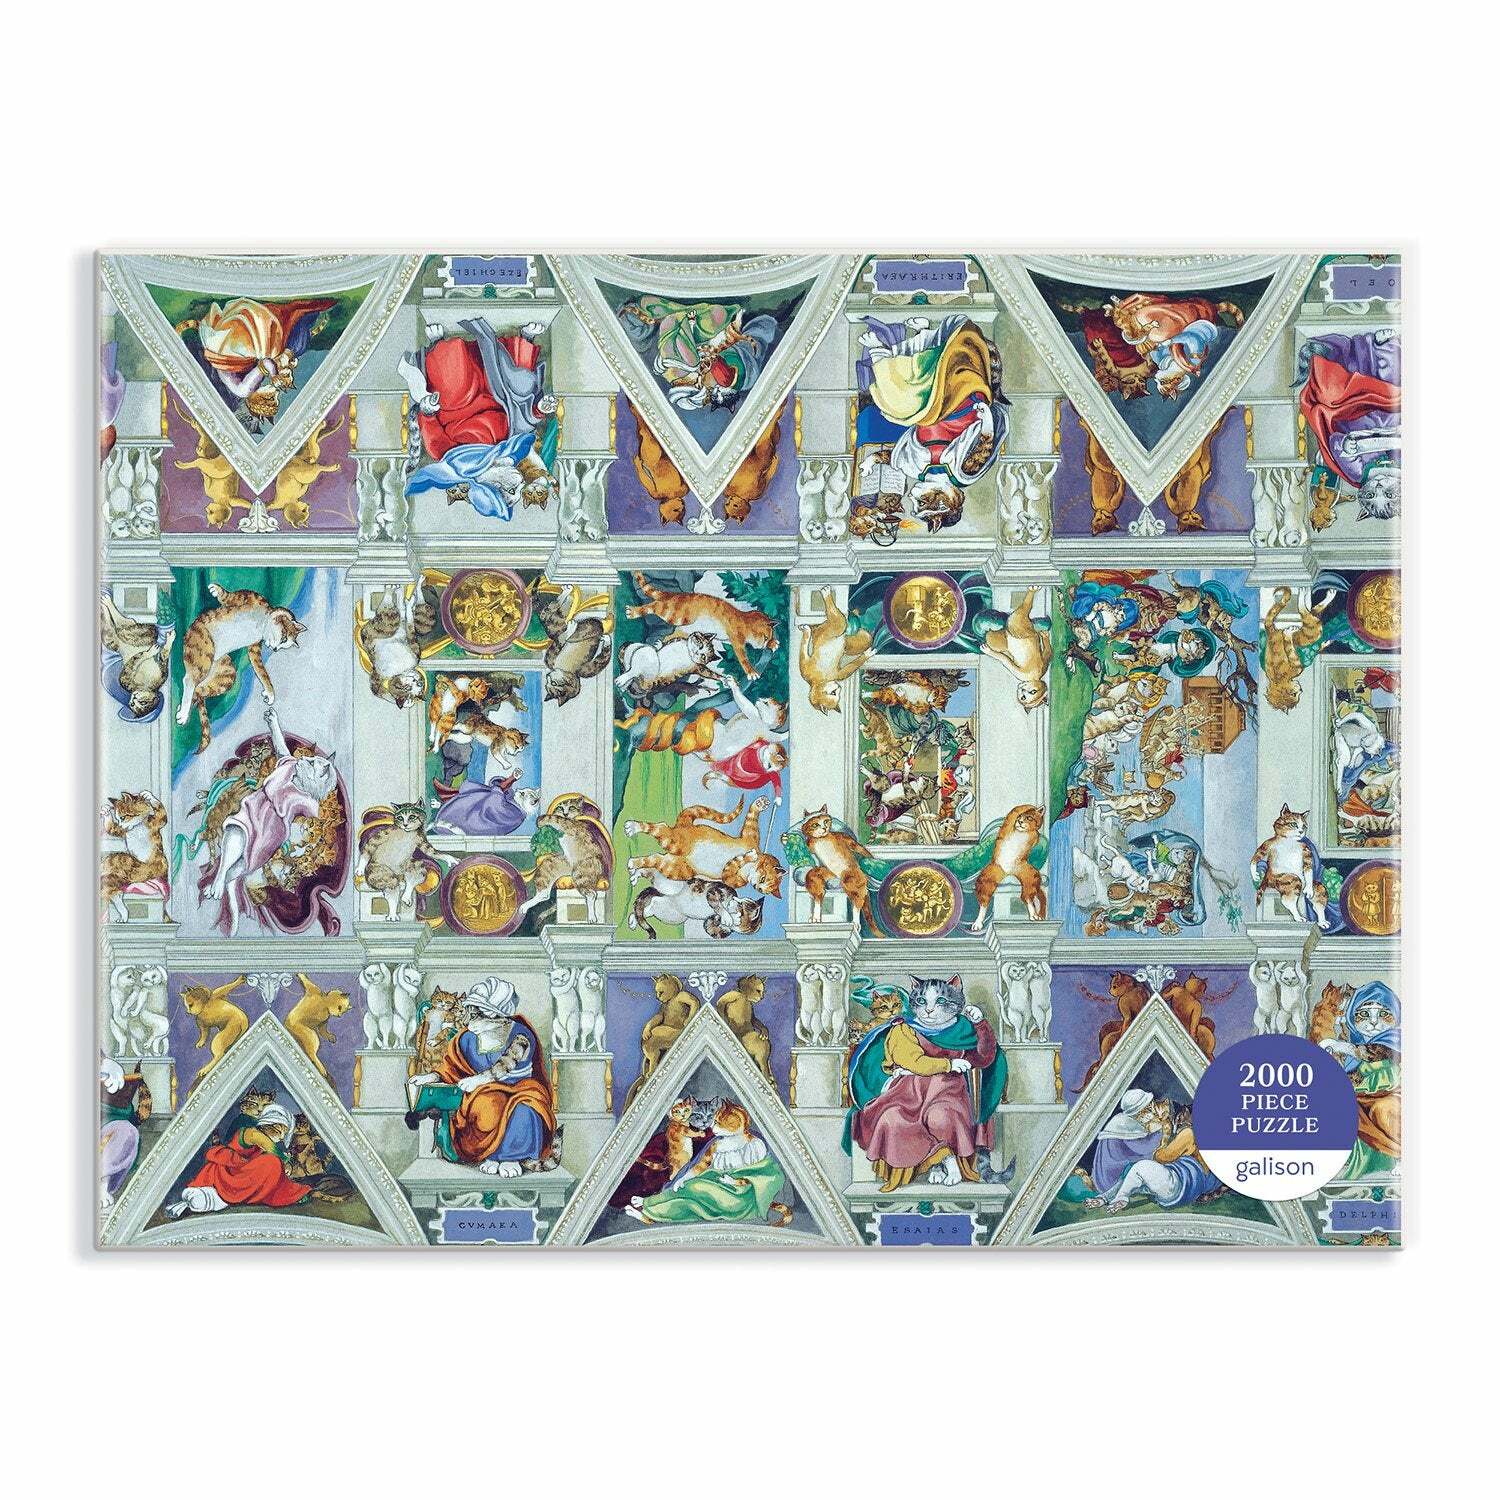 sistine-chapel-ceiling-meowsterpiece-of-western-art-2000-piece-jigsaw-puzzle-2000-piece-puzzles-susan-herbert-235146_2400x